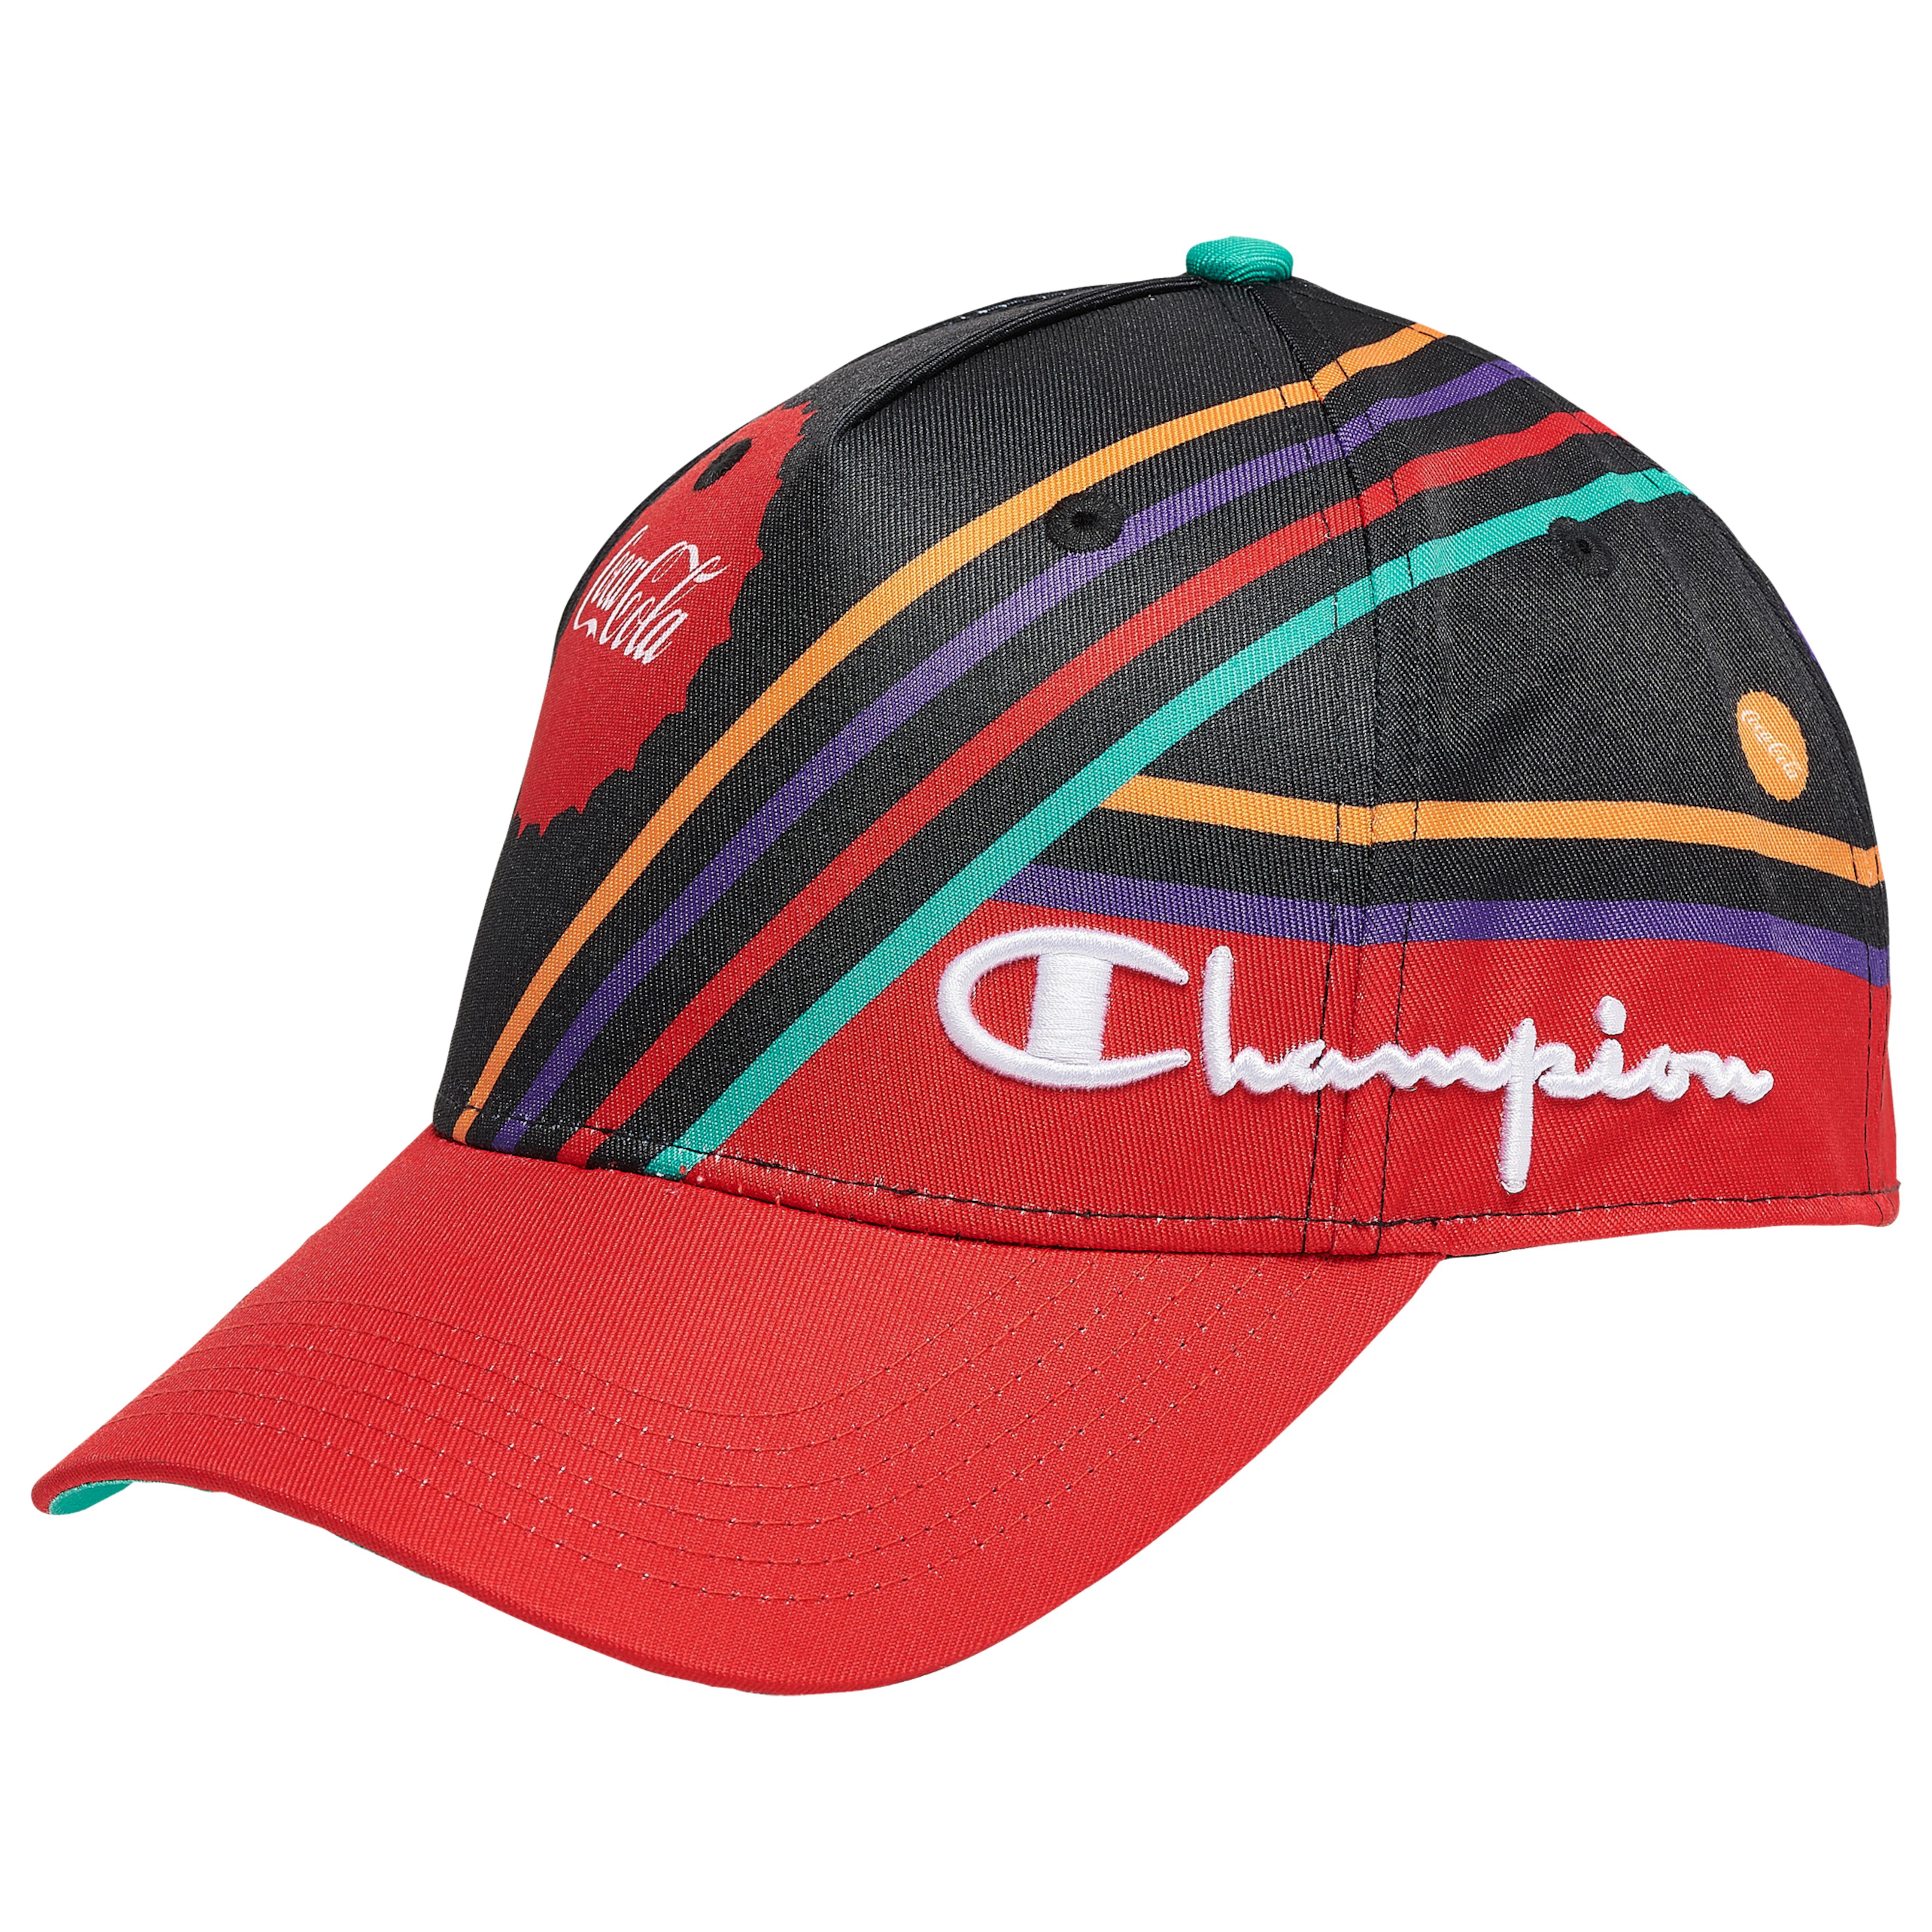 champion cap red